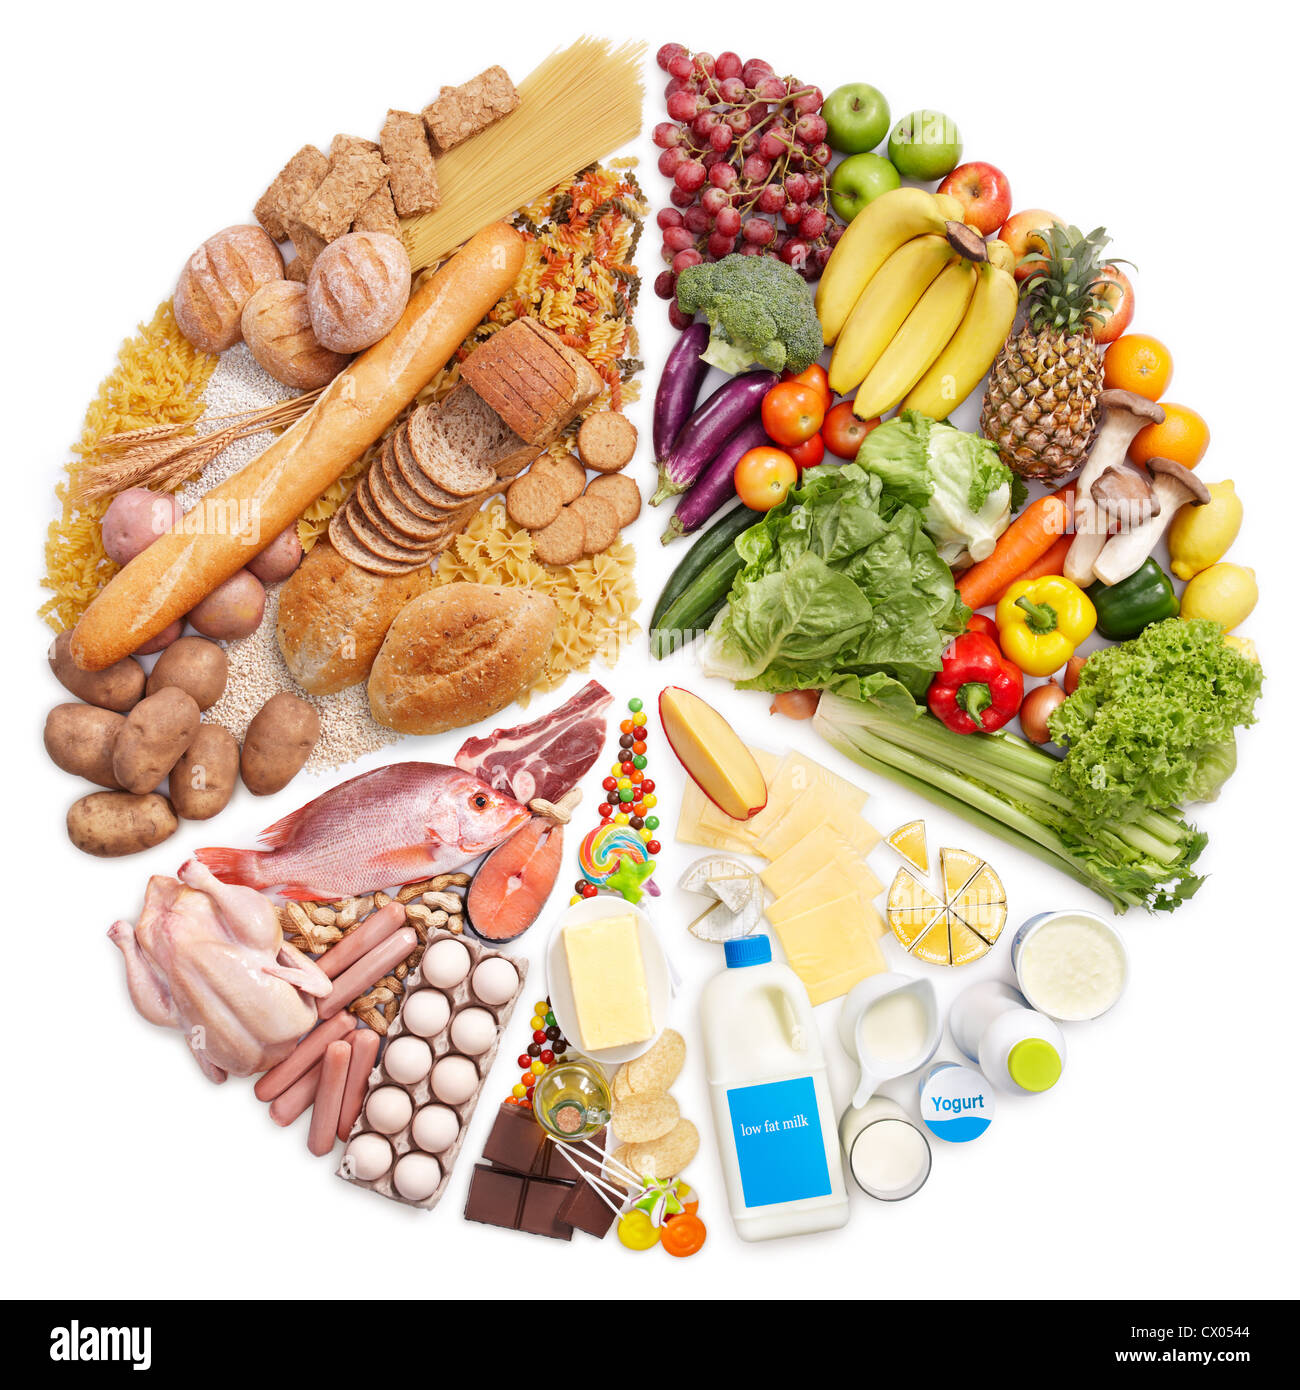 Food Pyramid Nutrition Chart